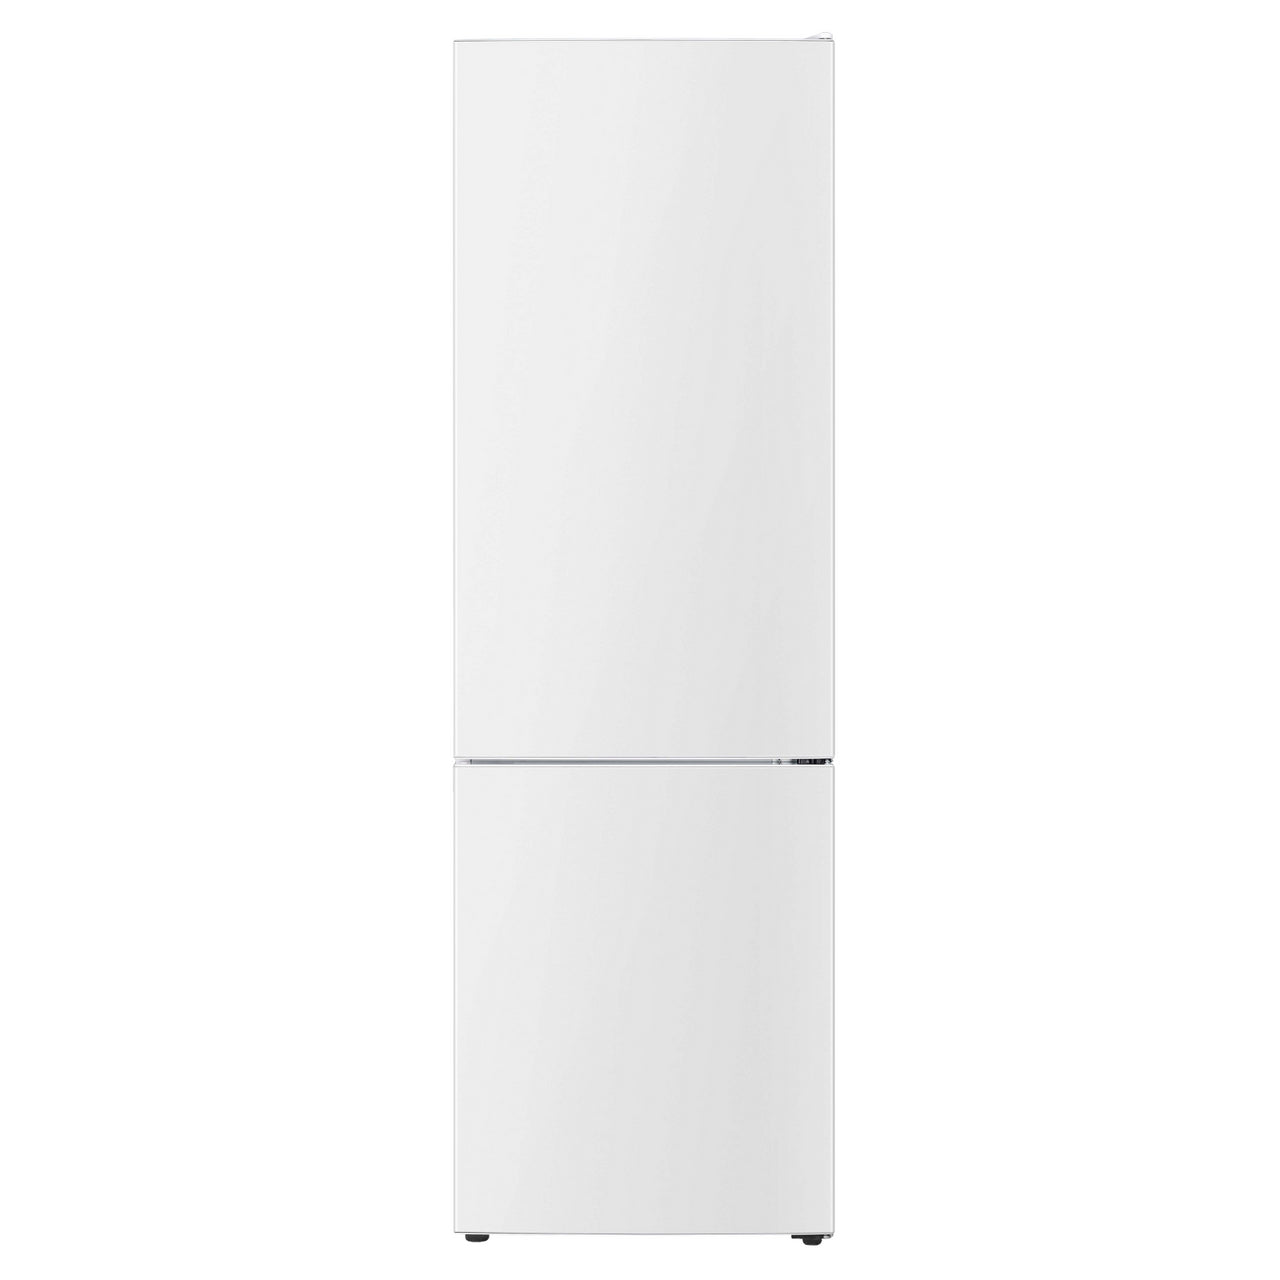 SIA SFF17670W 55cm Wide 176cm High Low Frost Fridge Freezer in White